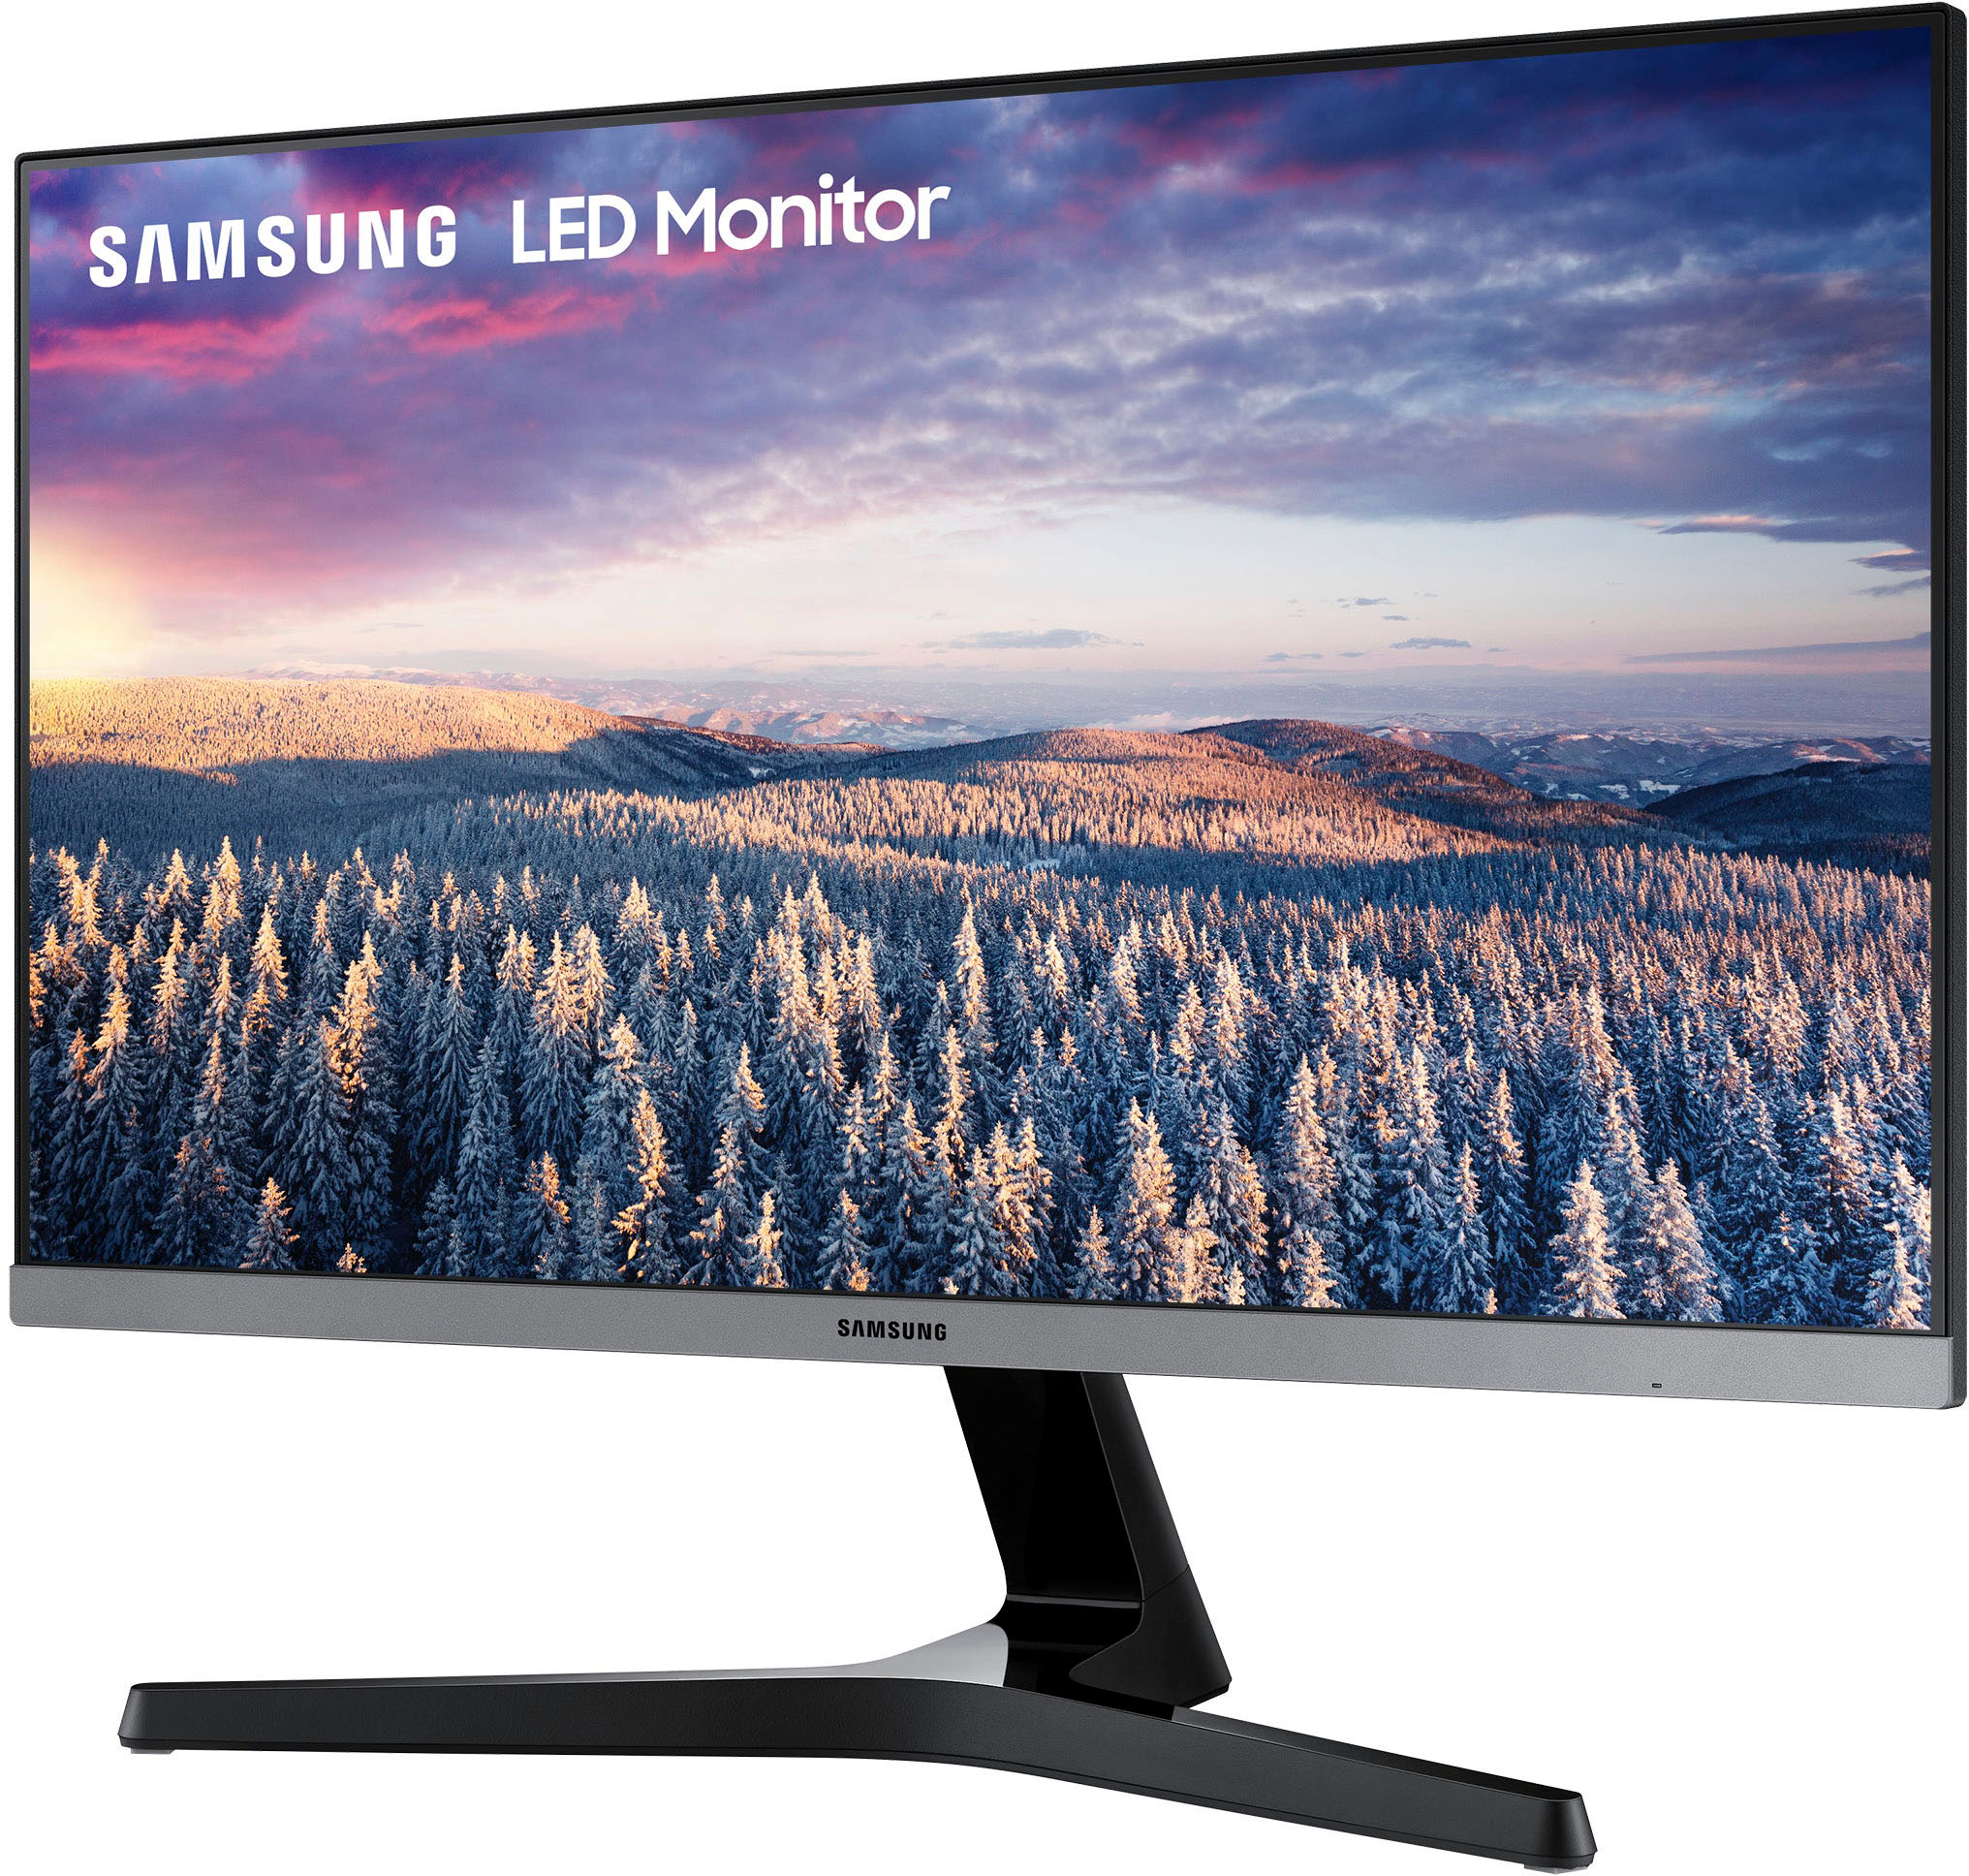 Klassiek leven Menselijk ras Samsung 24" LED FHD AMD FreeSync Monitor with bezel-less design (HDMI,  D-sub) Black LS24R35AFHNXZA - Best Buy